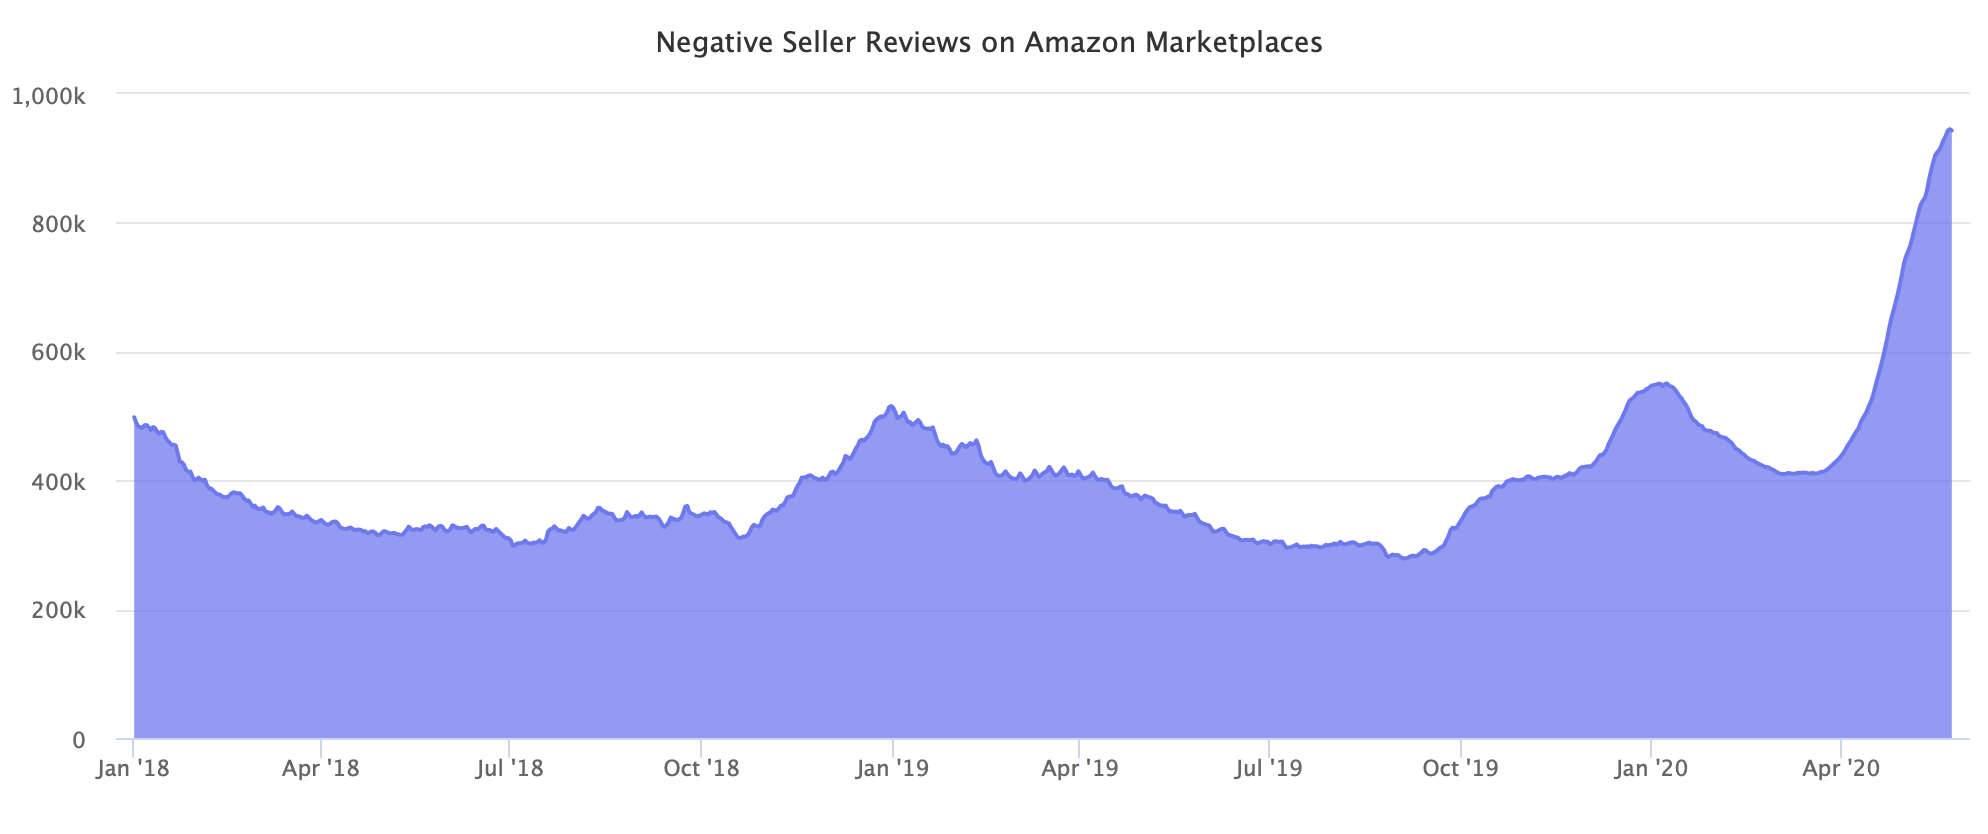 Negative Seller Reviews on Amazon Marketplaces